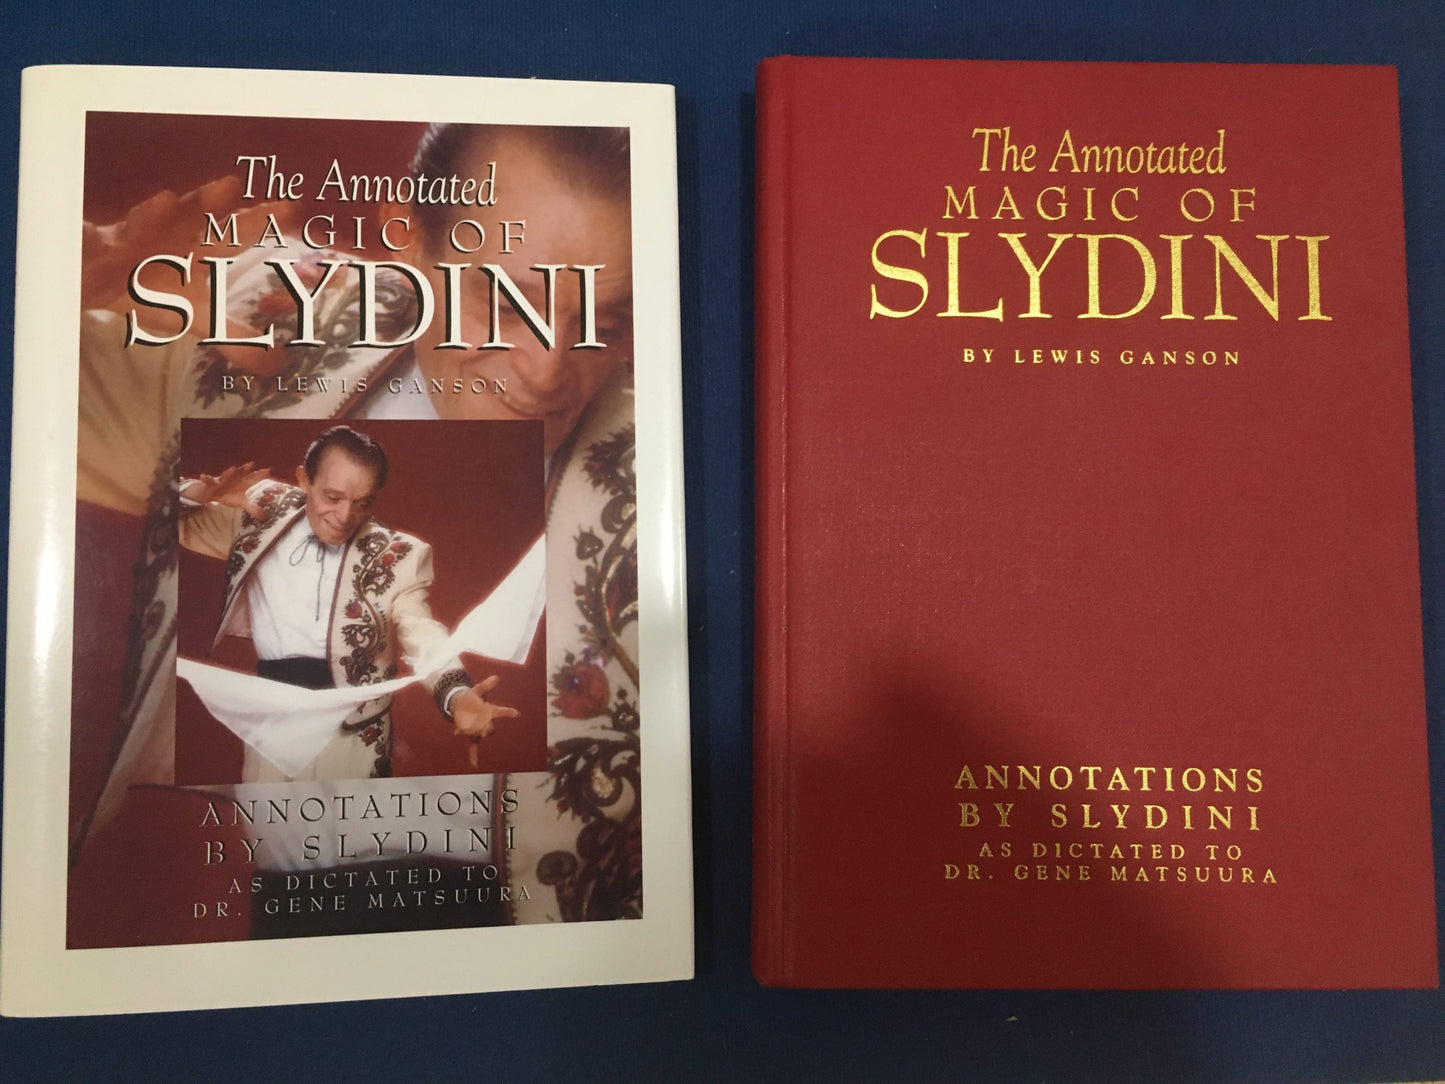 The Annotated Magic of Slydini, Signed!